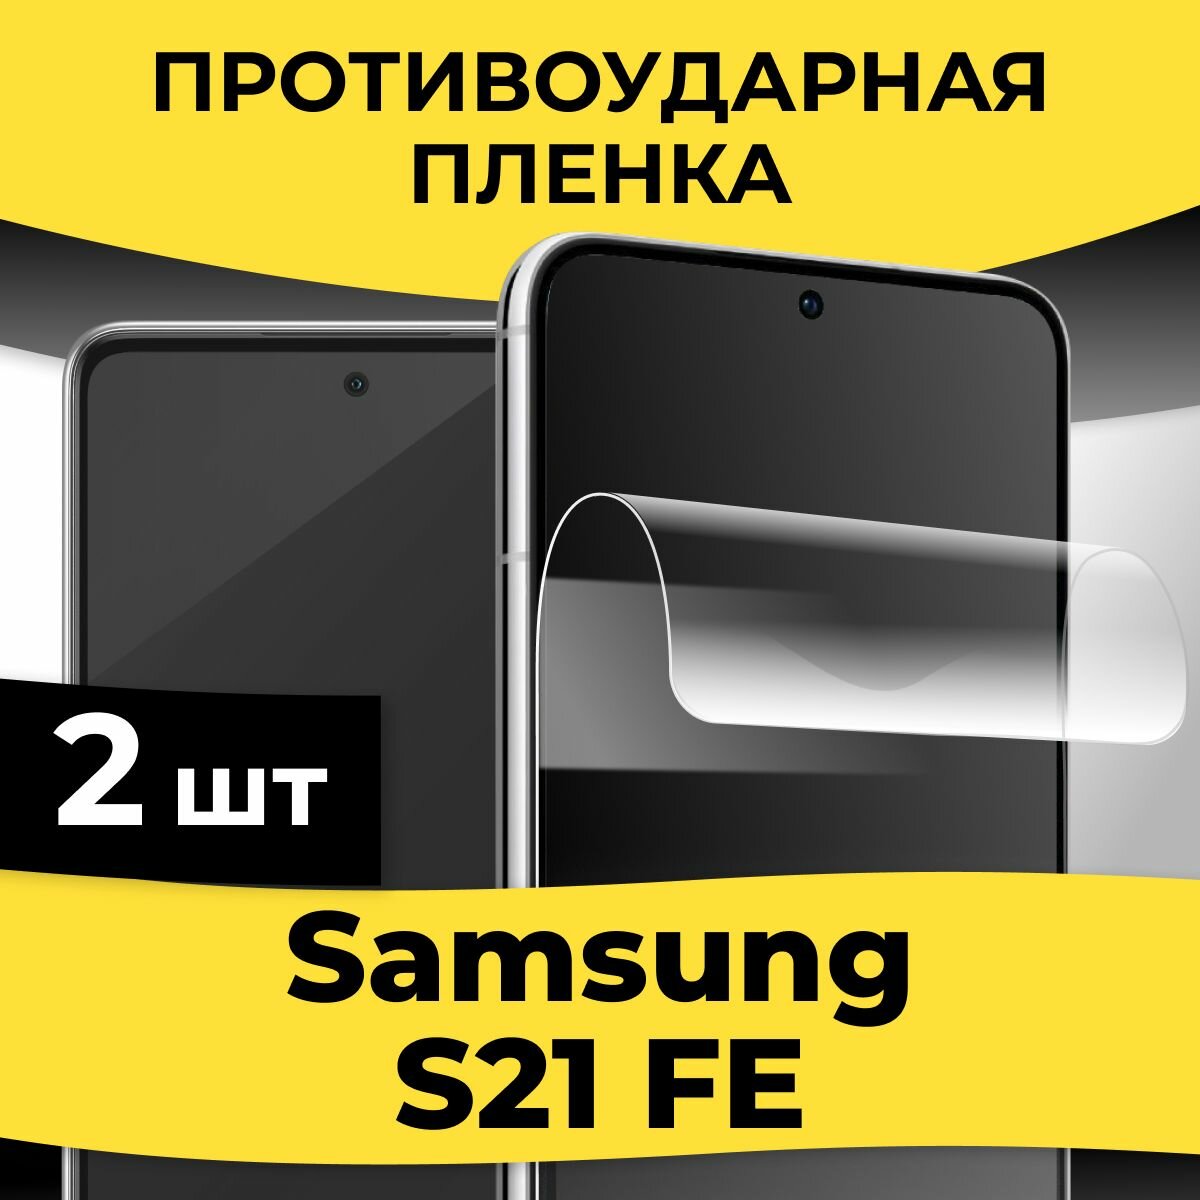 Комплект 2 шт. Самовосстанавливающаяся пленка для смартфона Samsung Galaxy S21 FE / Защитная пленка на телефон Самсунг С21 ФЕ / Глянцевая пленка